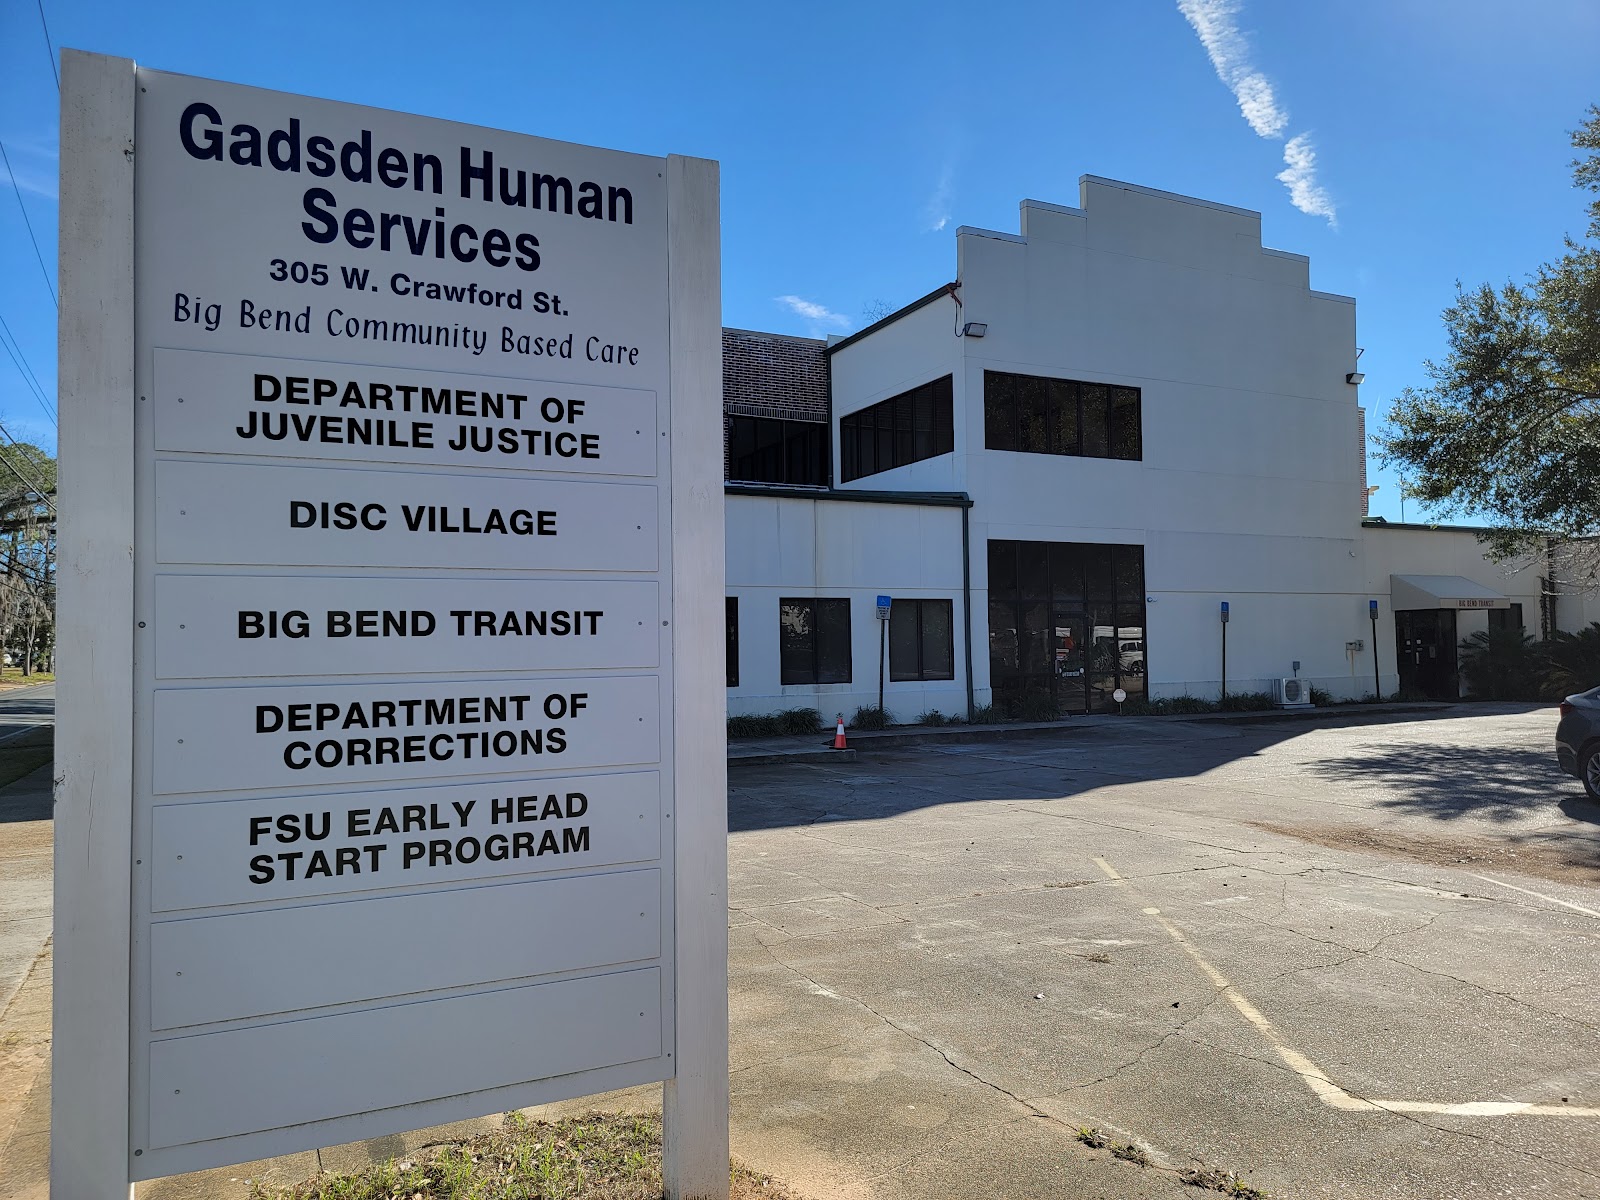 DISC Village - Gadsden County Human Services